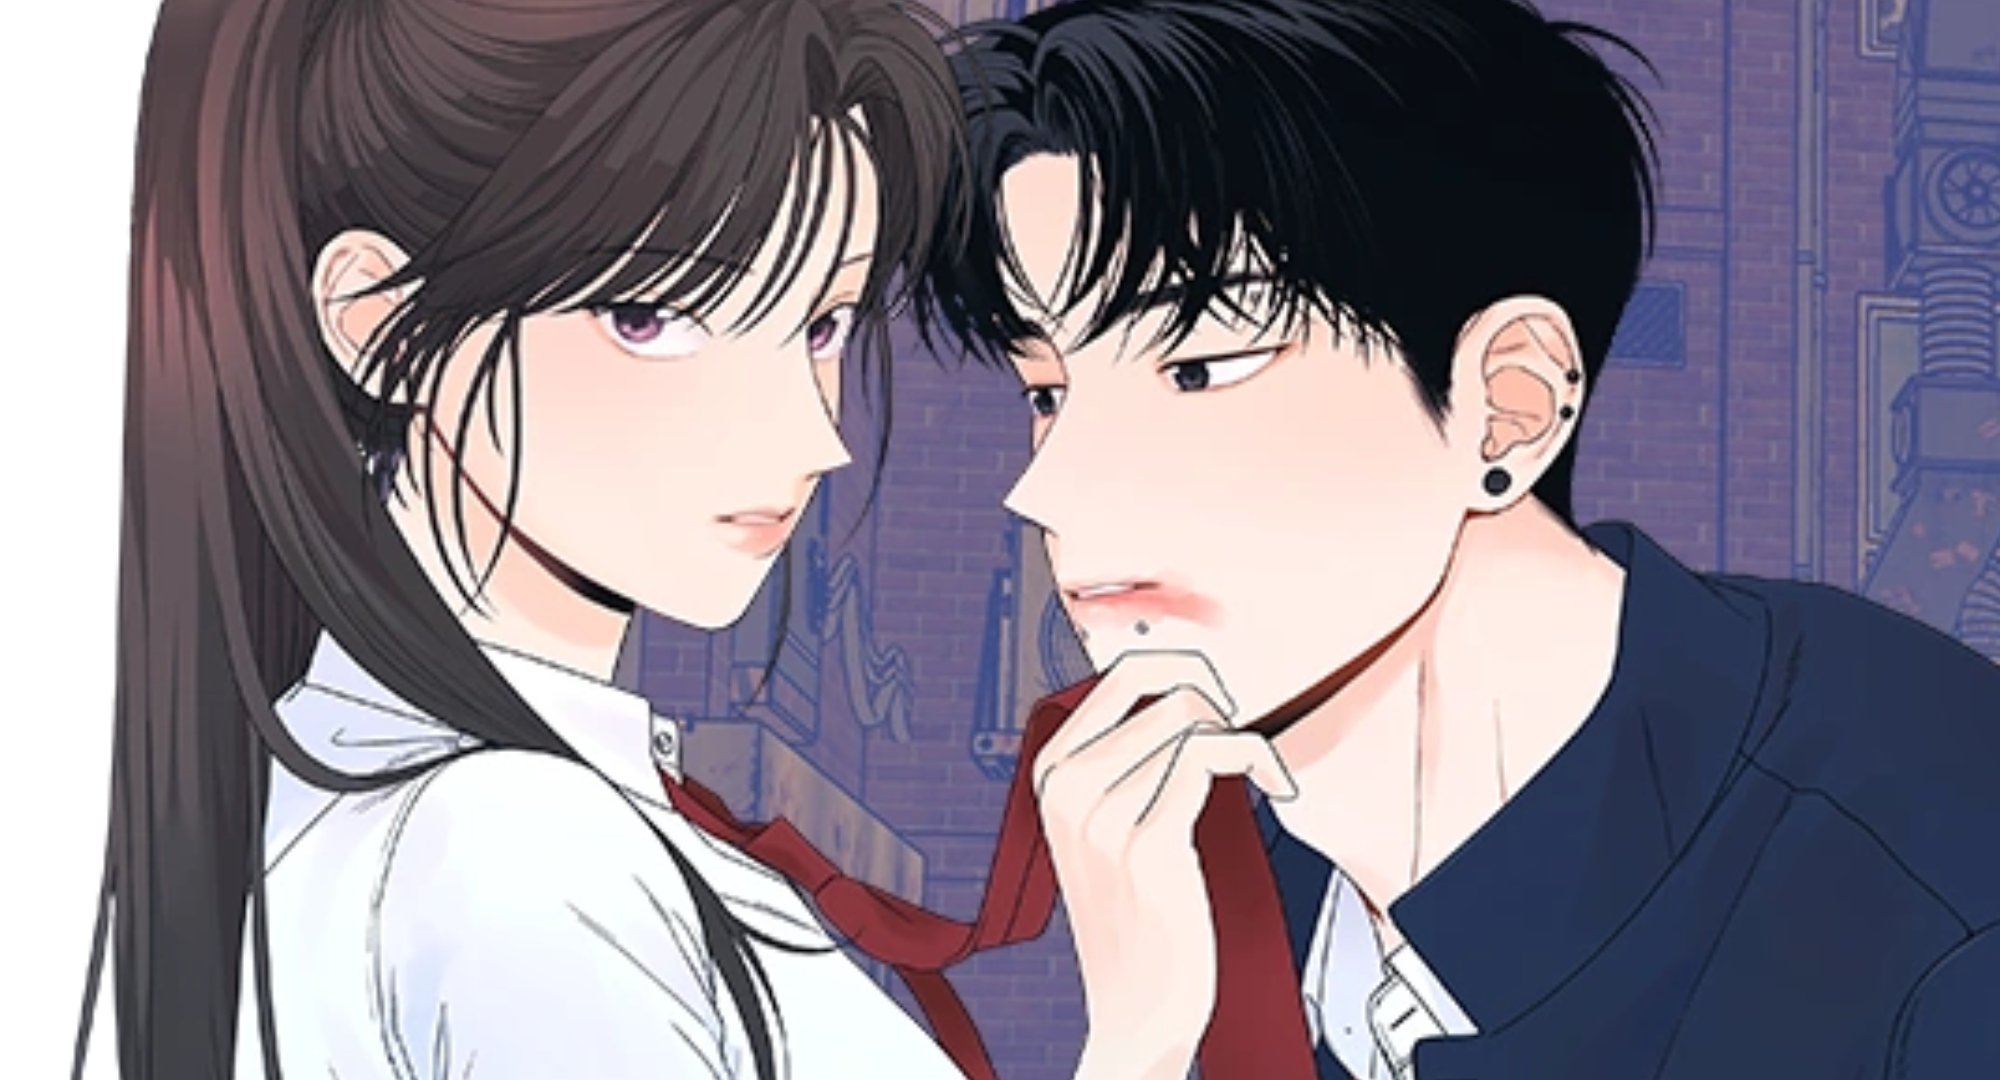 My Reason to Die': Sizzling Romance Webtoon Would Make a Perfect K-Drama  Adaptation